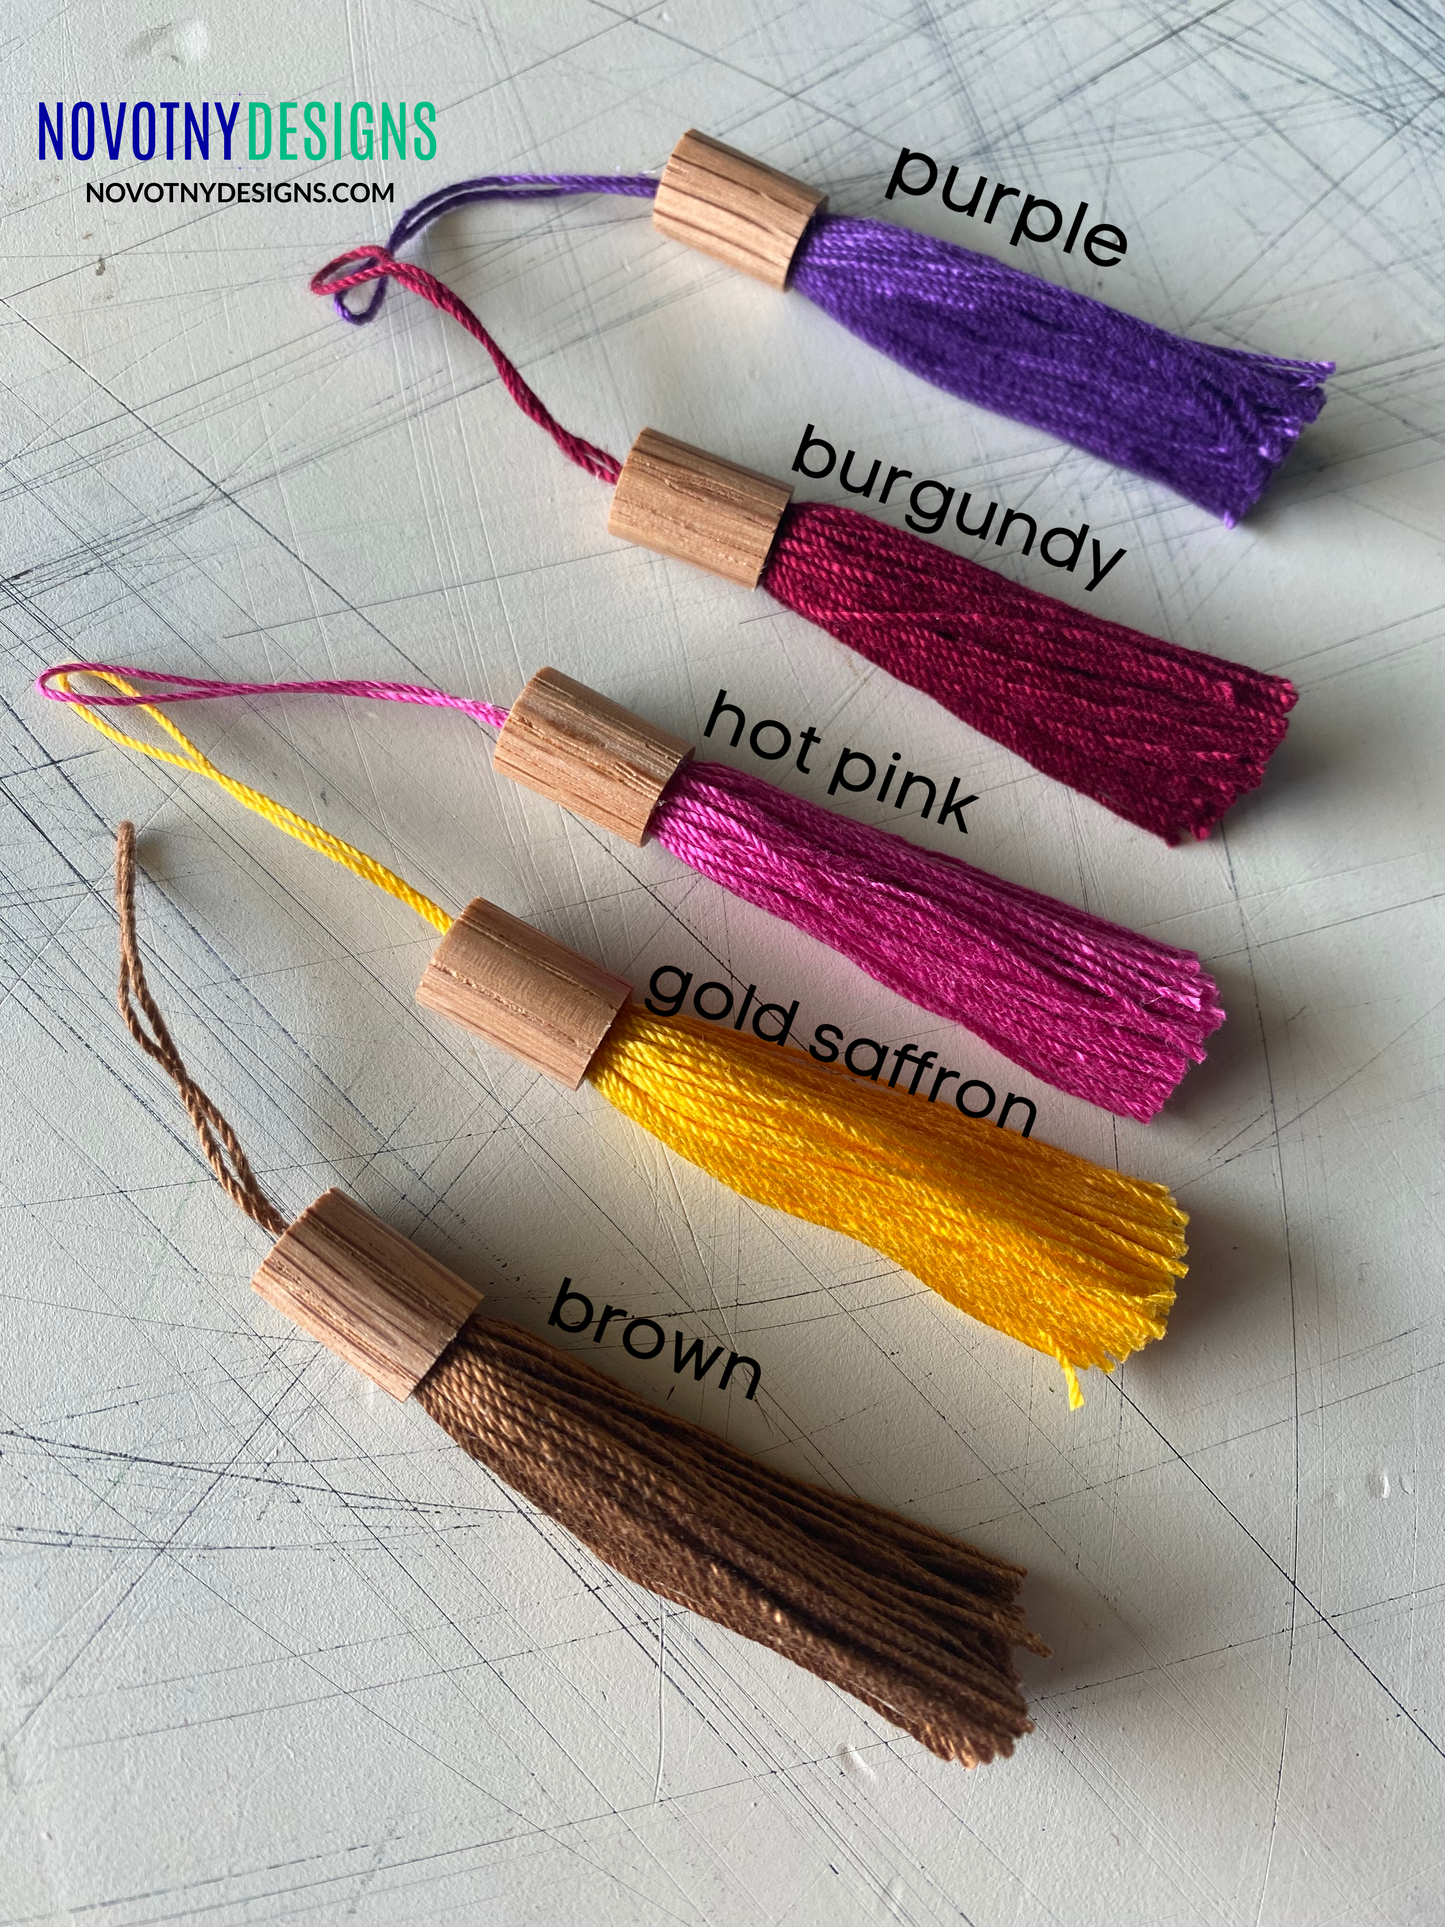 Bookmark tassel color selections - purple, burgundy, hot pink, gold saffron, brown